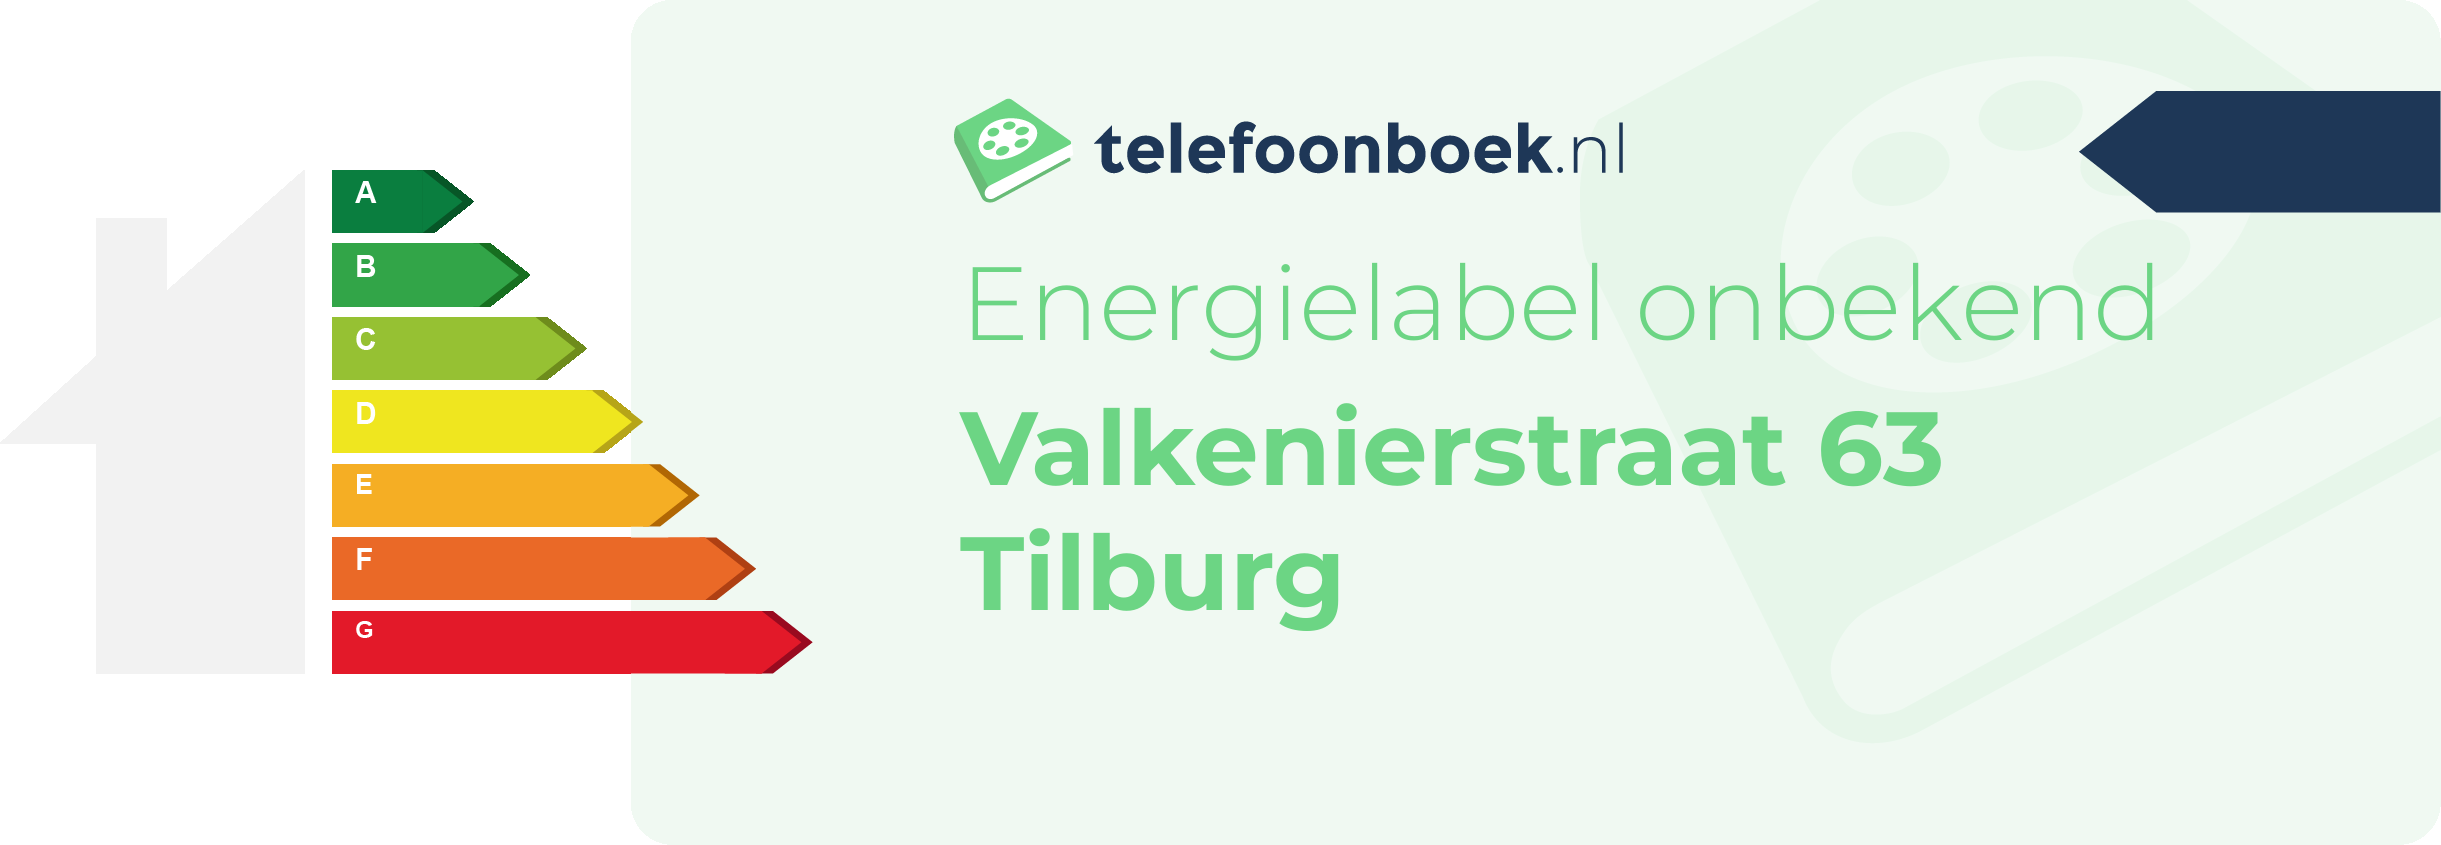 Energielabel Valkenierstraat 63 Tilburg